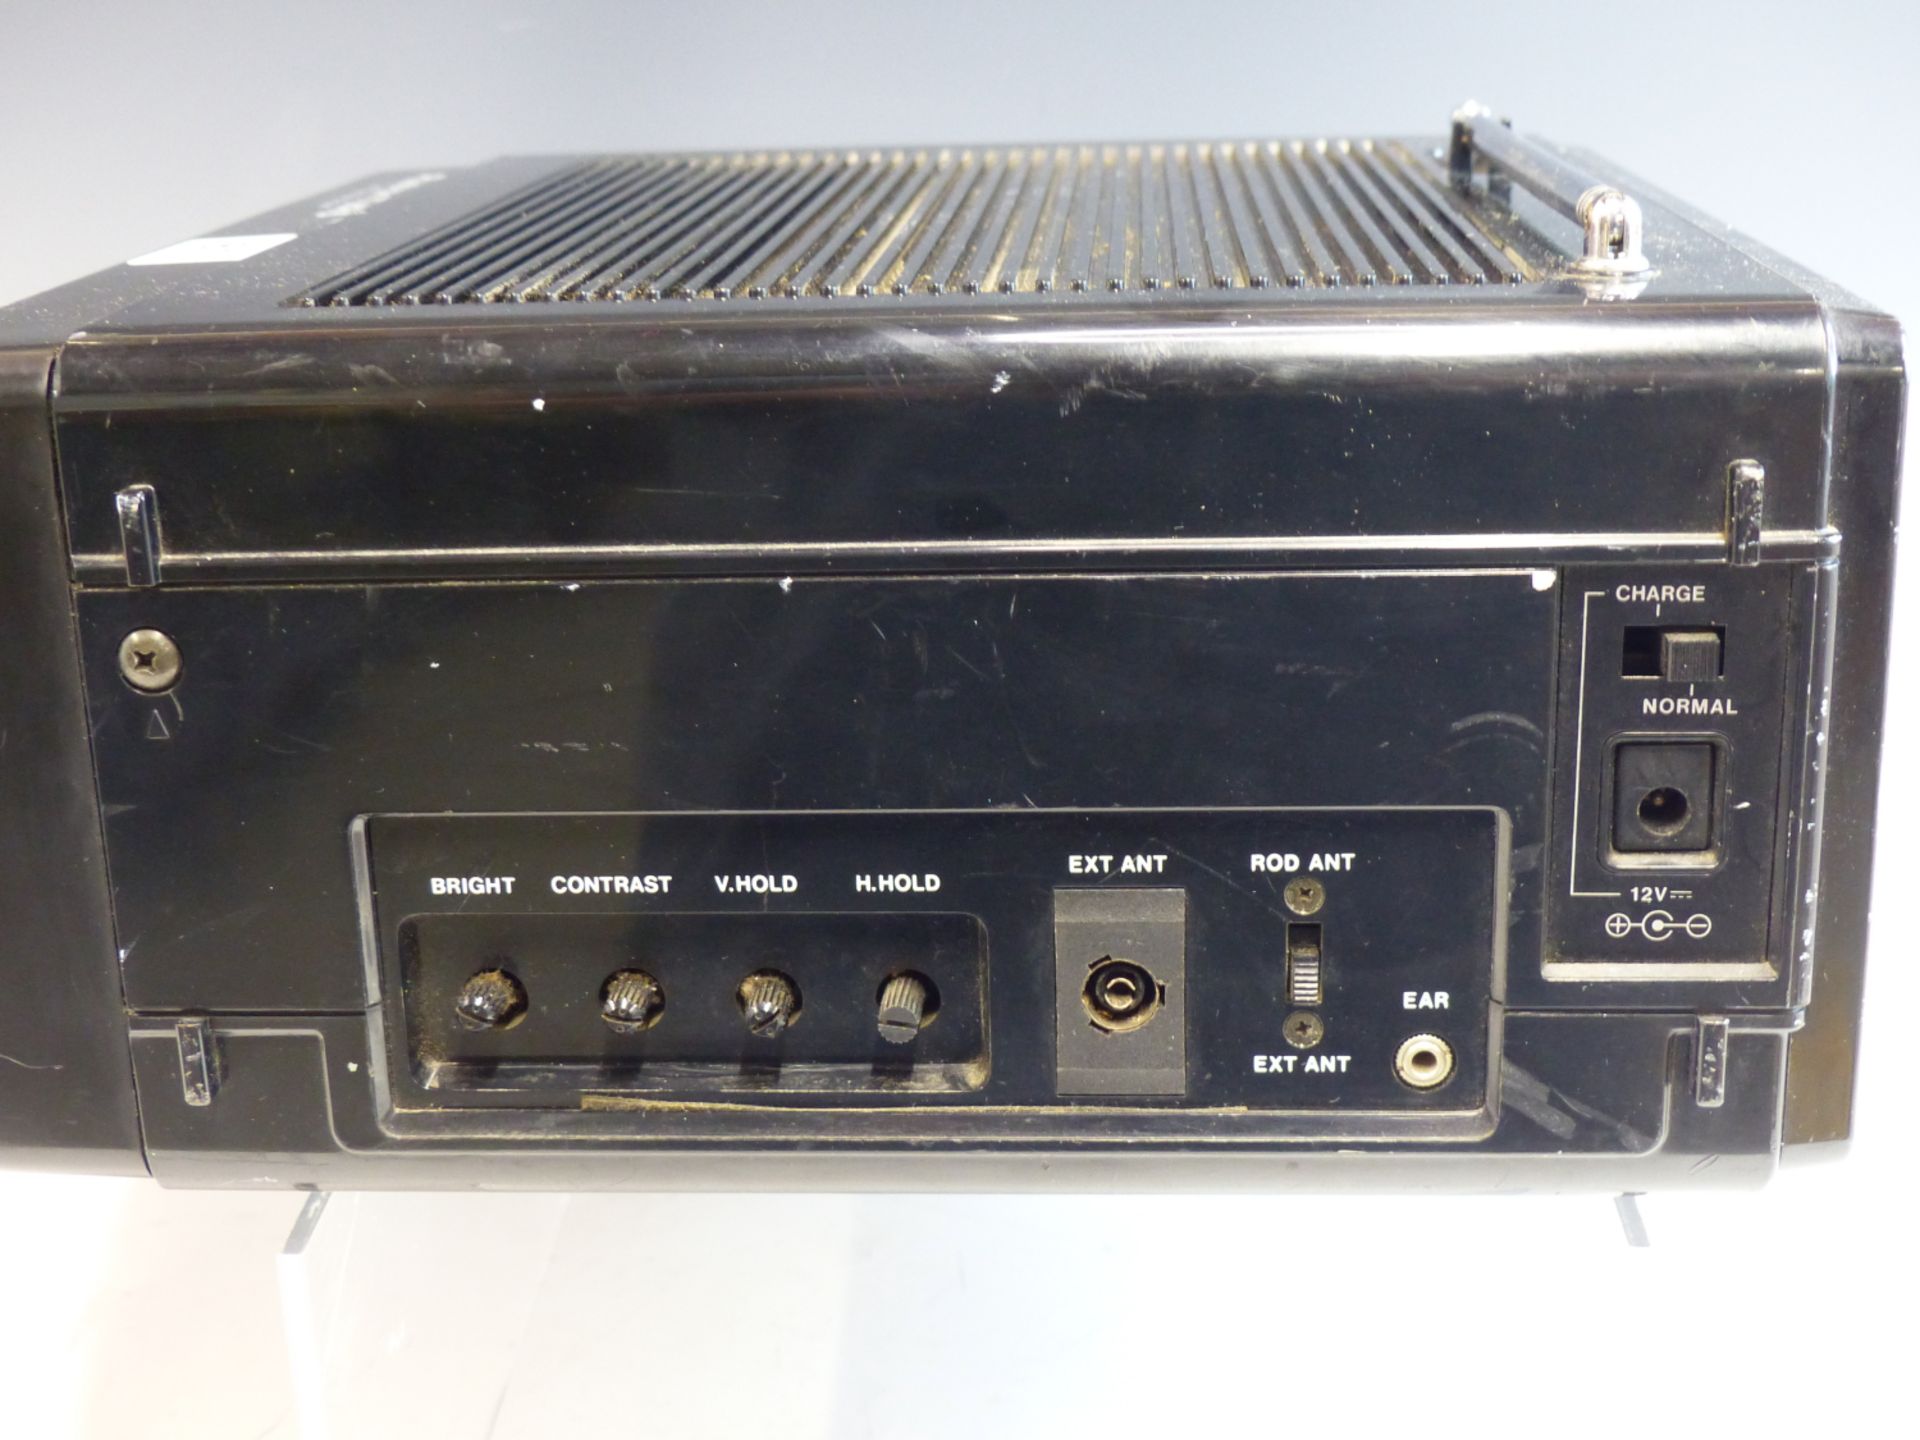 A RETRO VINTAGE PLUSTRON TVR 5 PORTABLE TV RADIO. - Image 5 of 5